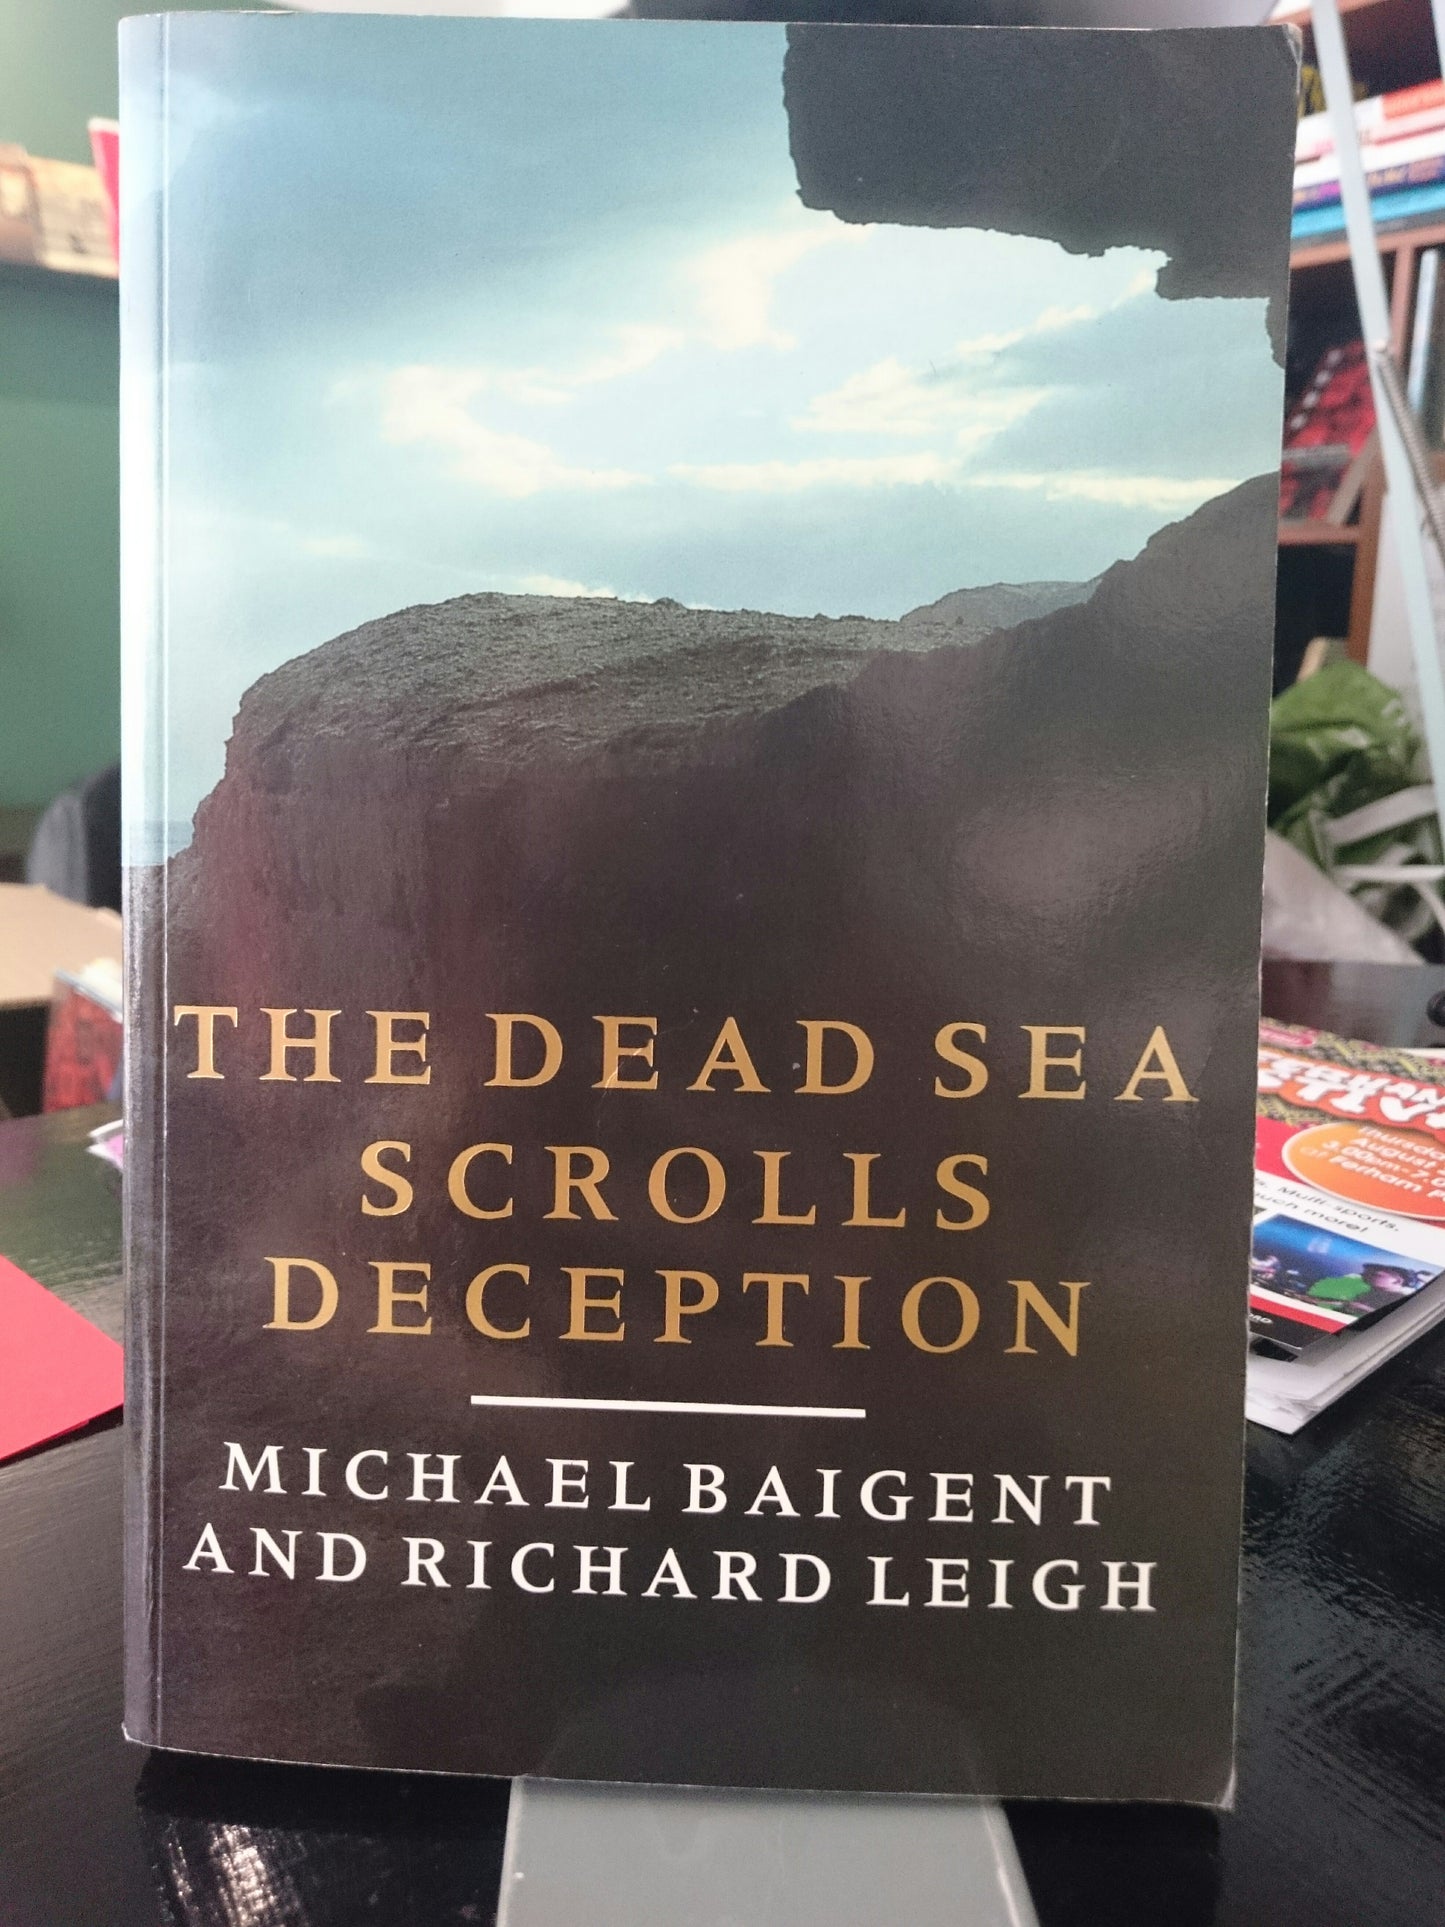 The Dead Sea Scrolls Deception